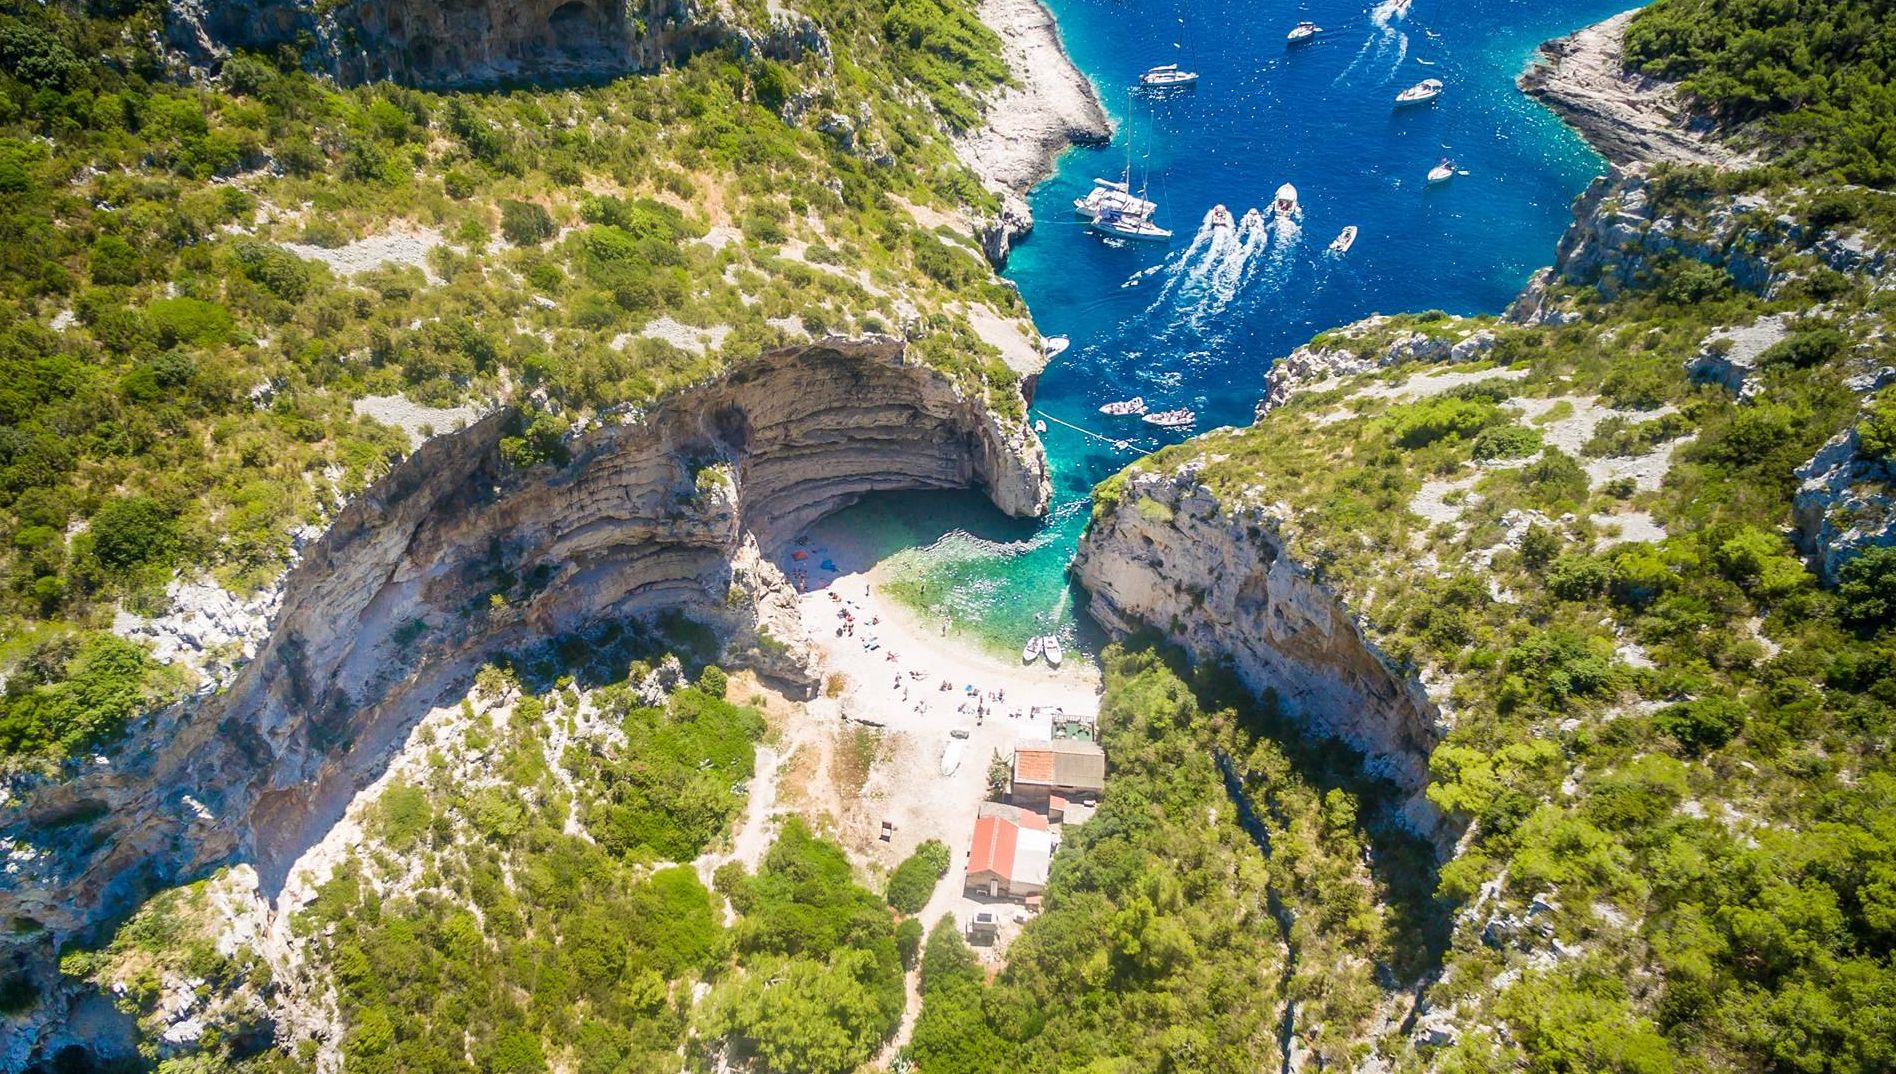 [VIDEO] Breathtaking Footage of the Croatian Coast